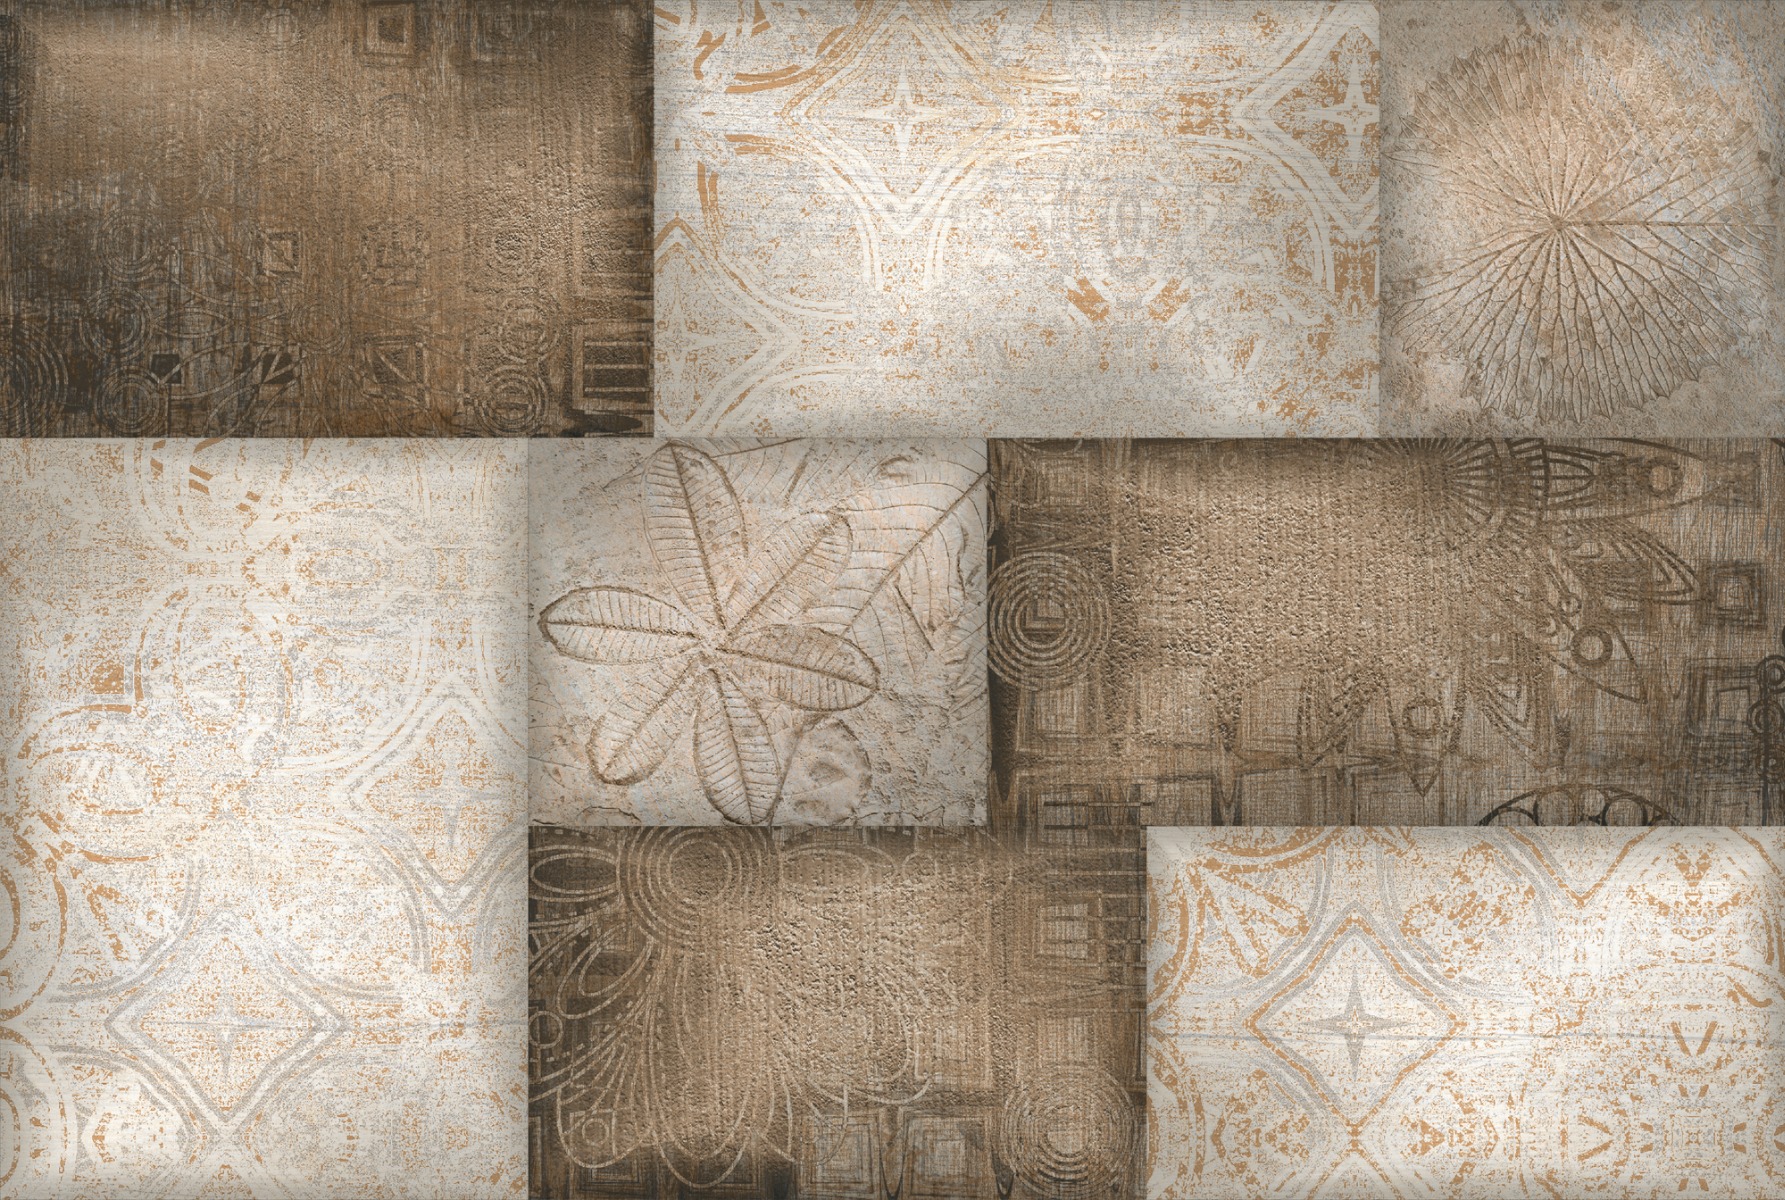 Duazzle Elevation Series for Elevation Tiles, Accent Tiles, Outdoor Tiles, Bar/Restaurant